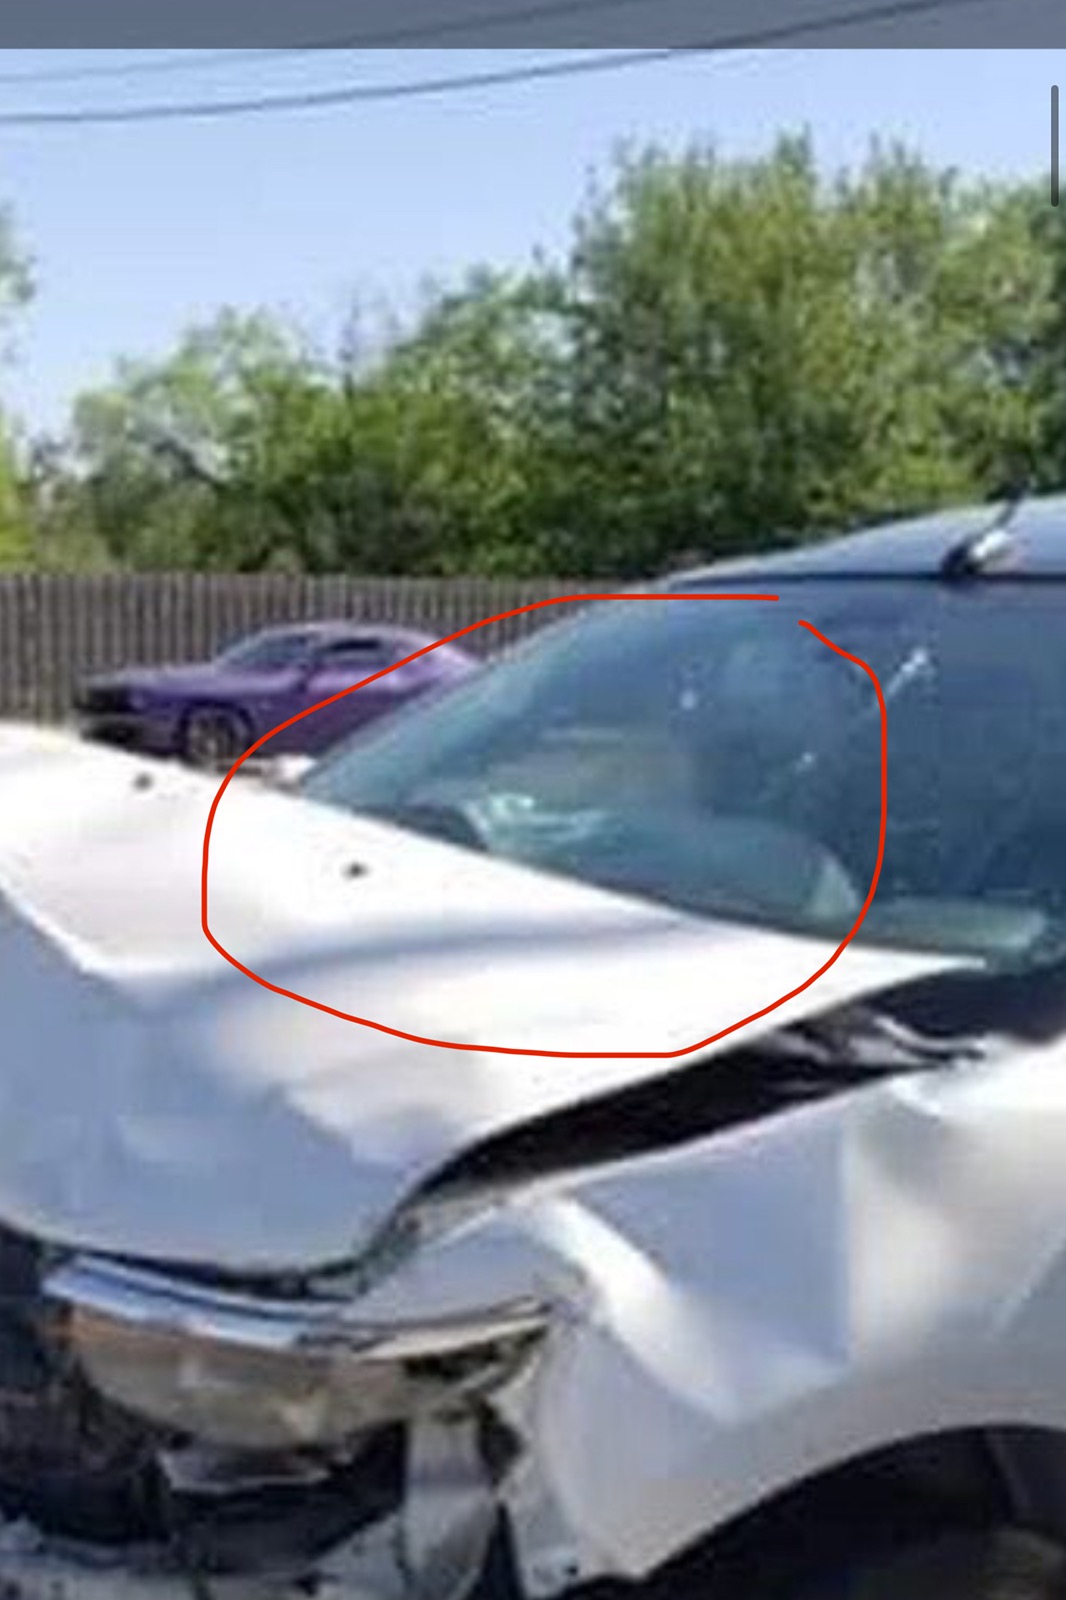 Tesla Cybertruck Cybertruck T-Bone accident at high speed - damage photos IMG_5765